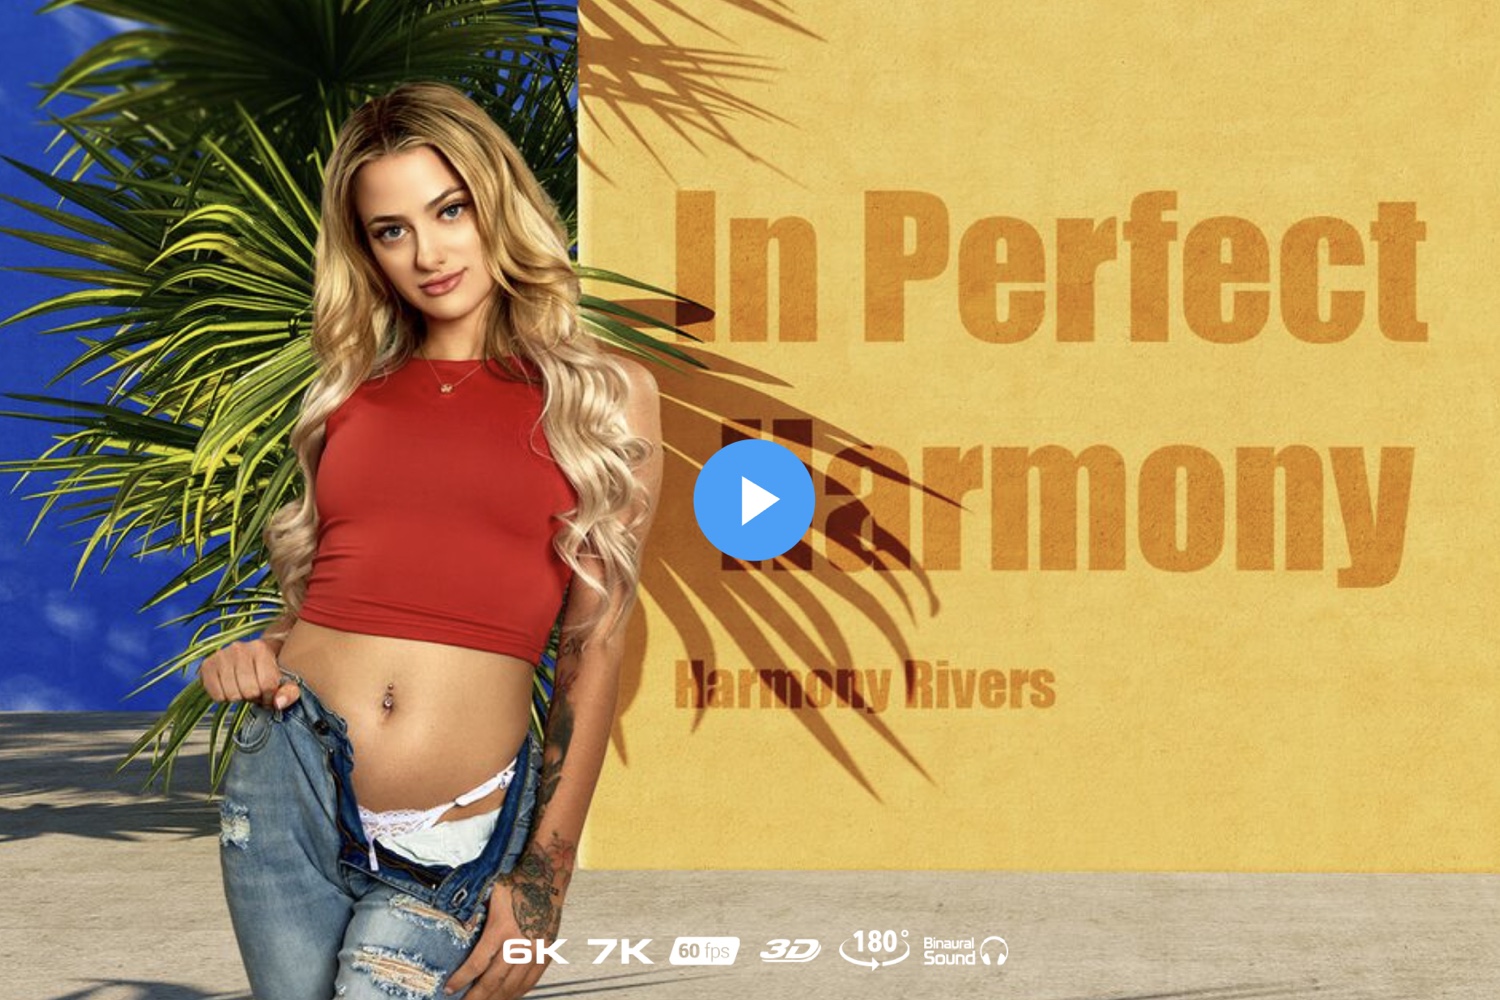 In Perfect Harmony - Harmony Rivers VR Porn - Harmony Rivers Virtual Reality Porn